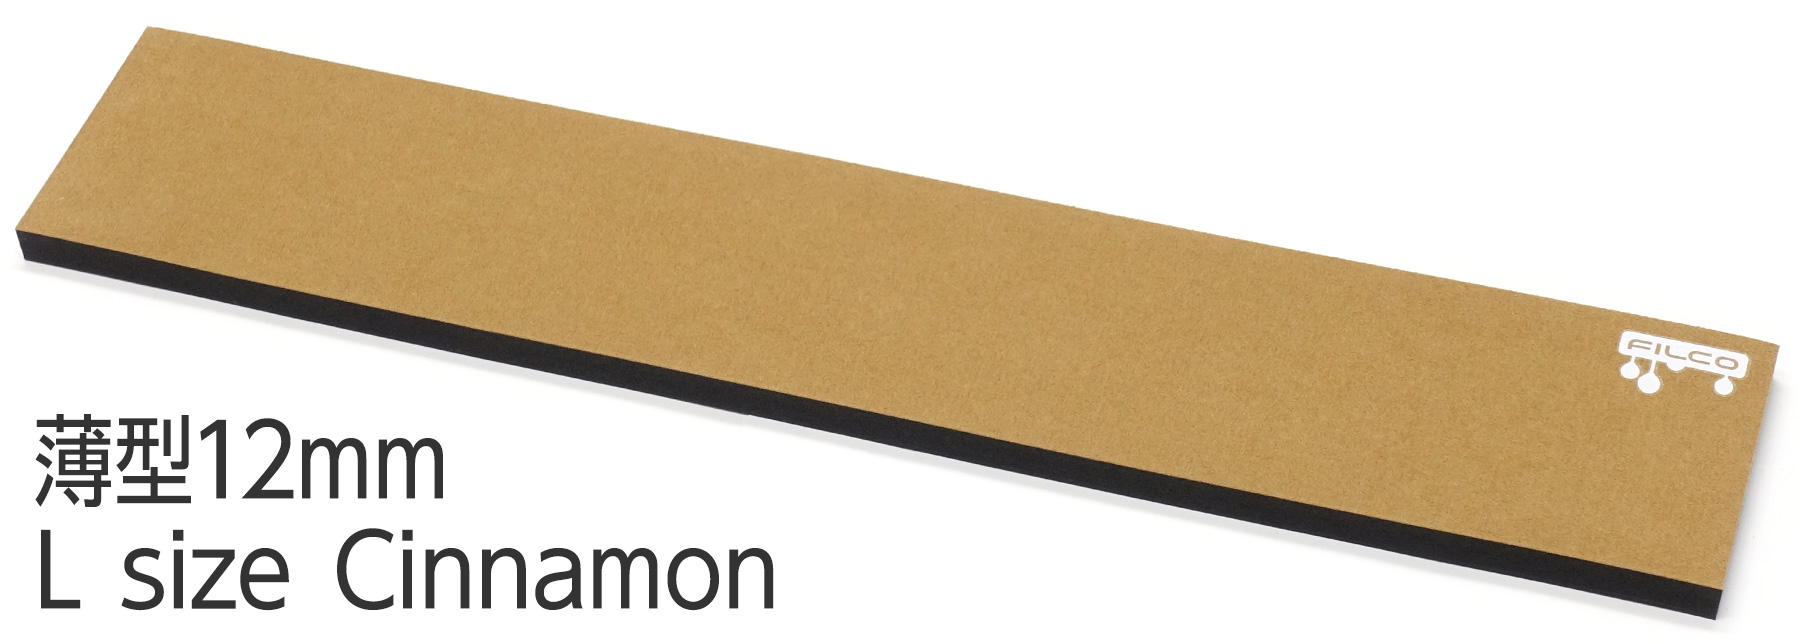 FILCO Majestouch Wrist Rest "Macaron" 薄型12mm・Lサイズ・Cinnamon